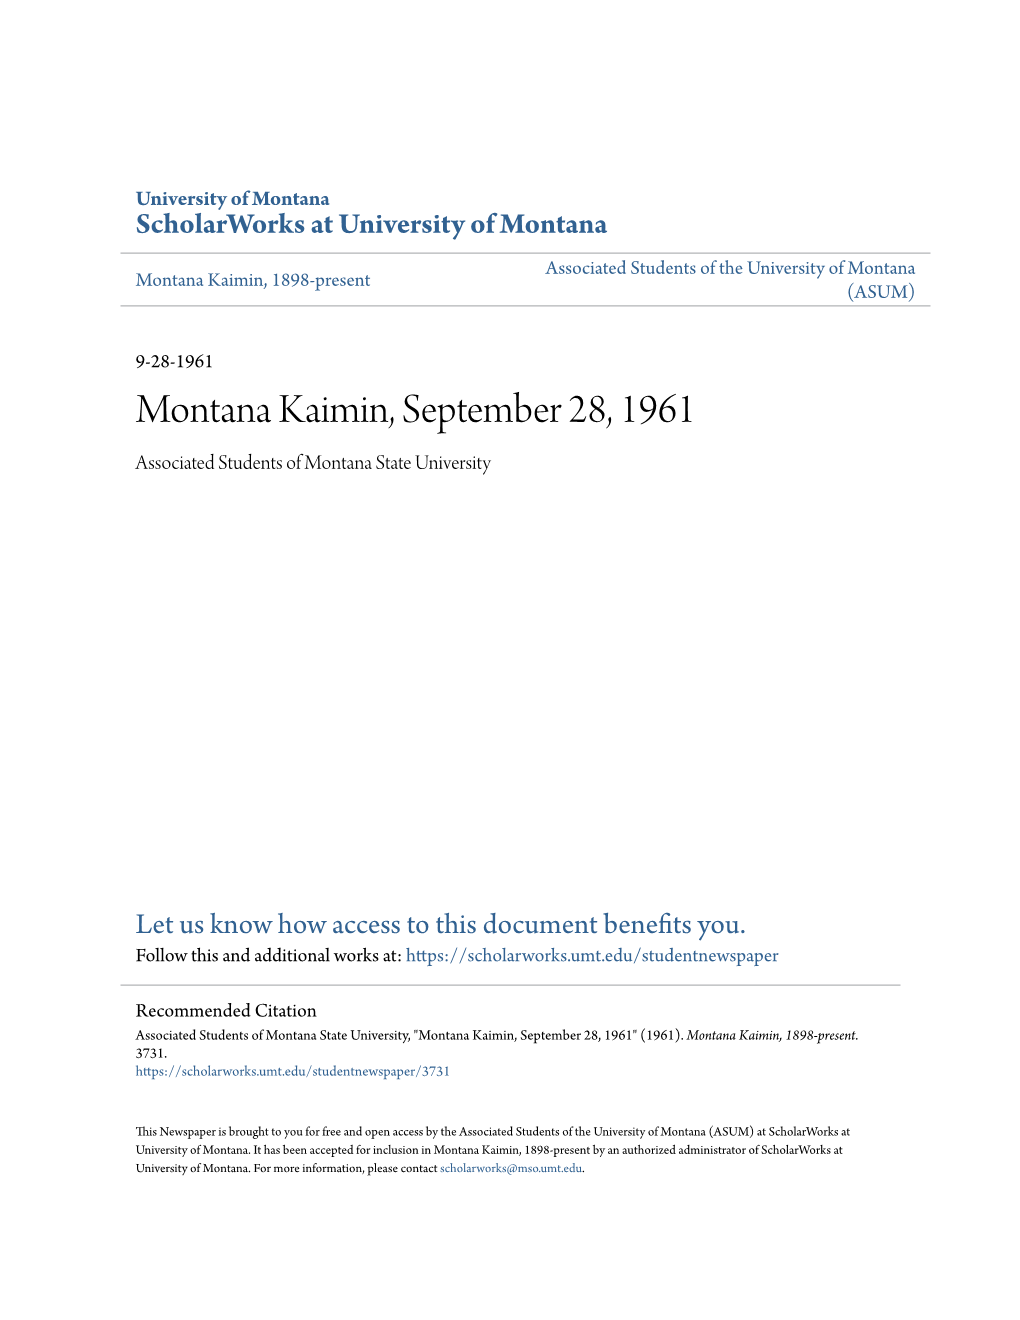 Montana Kaimin, September 28, 1961 Associated Students of Montana State University